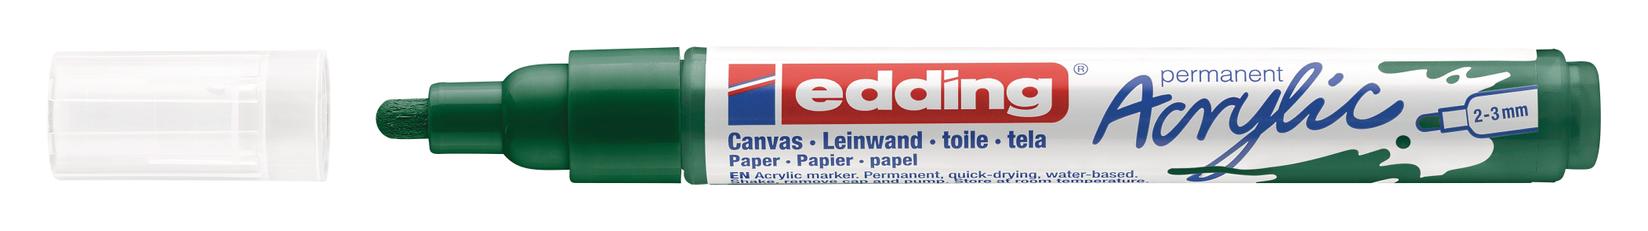 Selected image for EDDING Akrilni marker medium 2-3mm obli vrh E-5100 zimzeleni